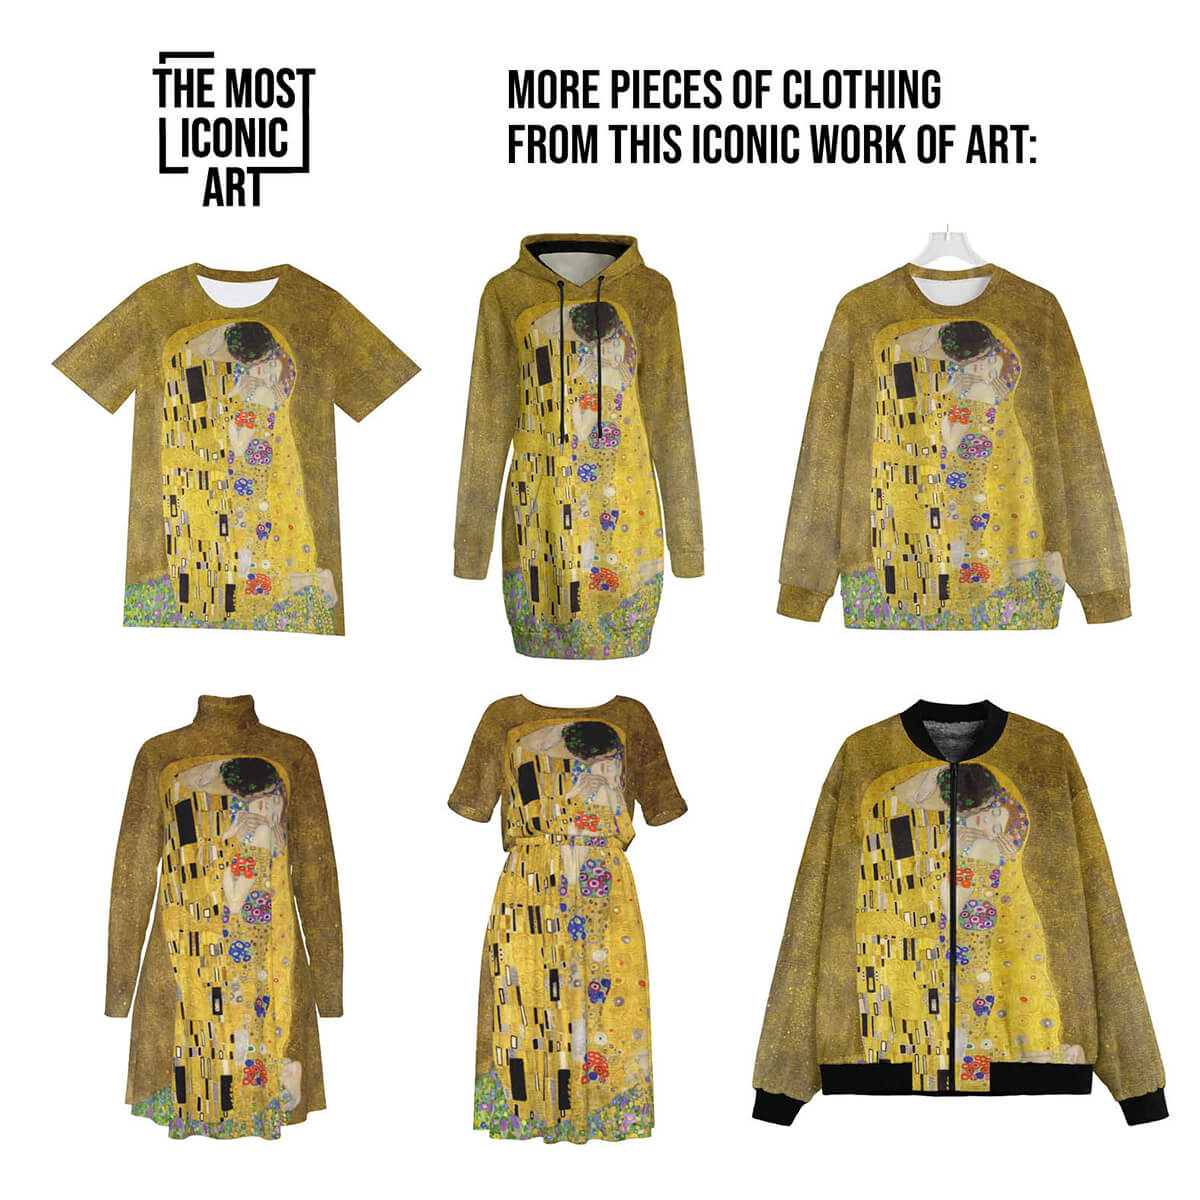 Fashionable attire by Gustav Klimt